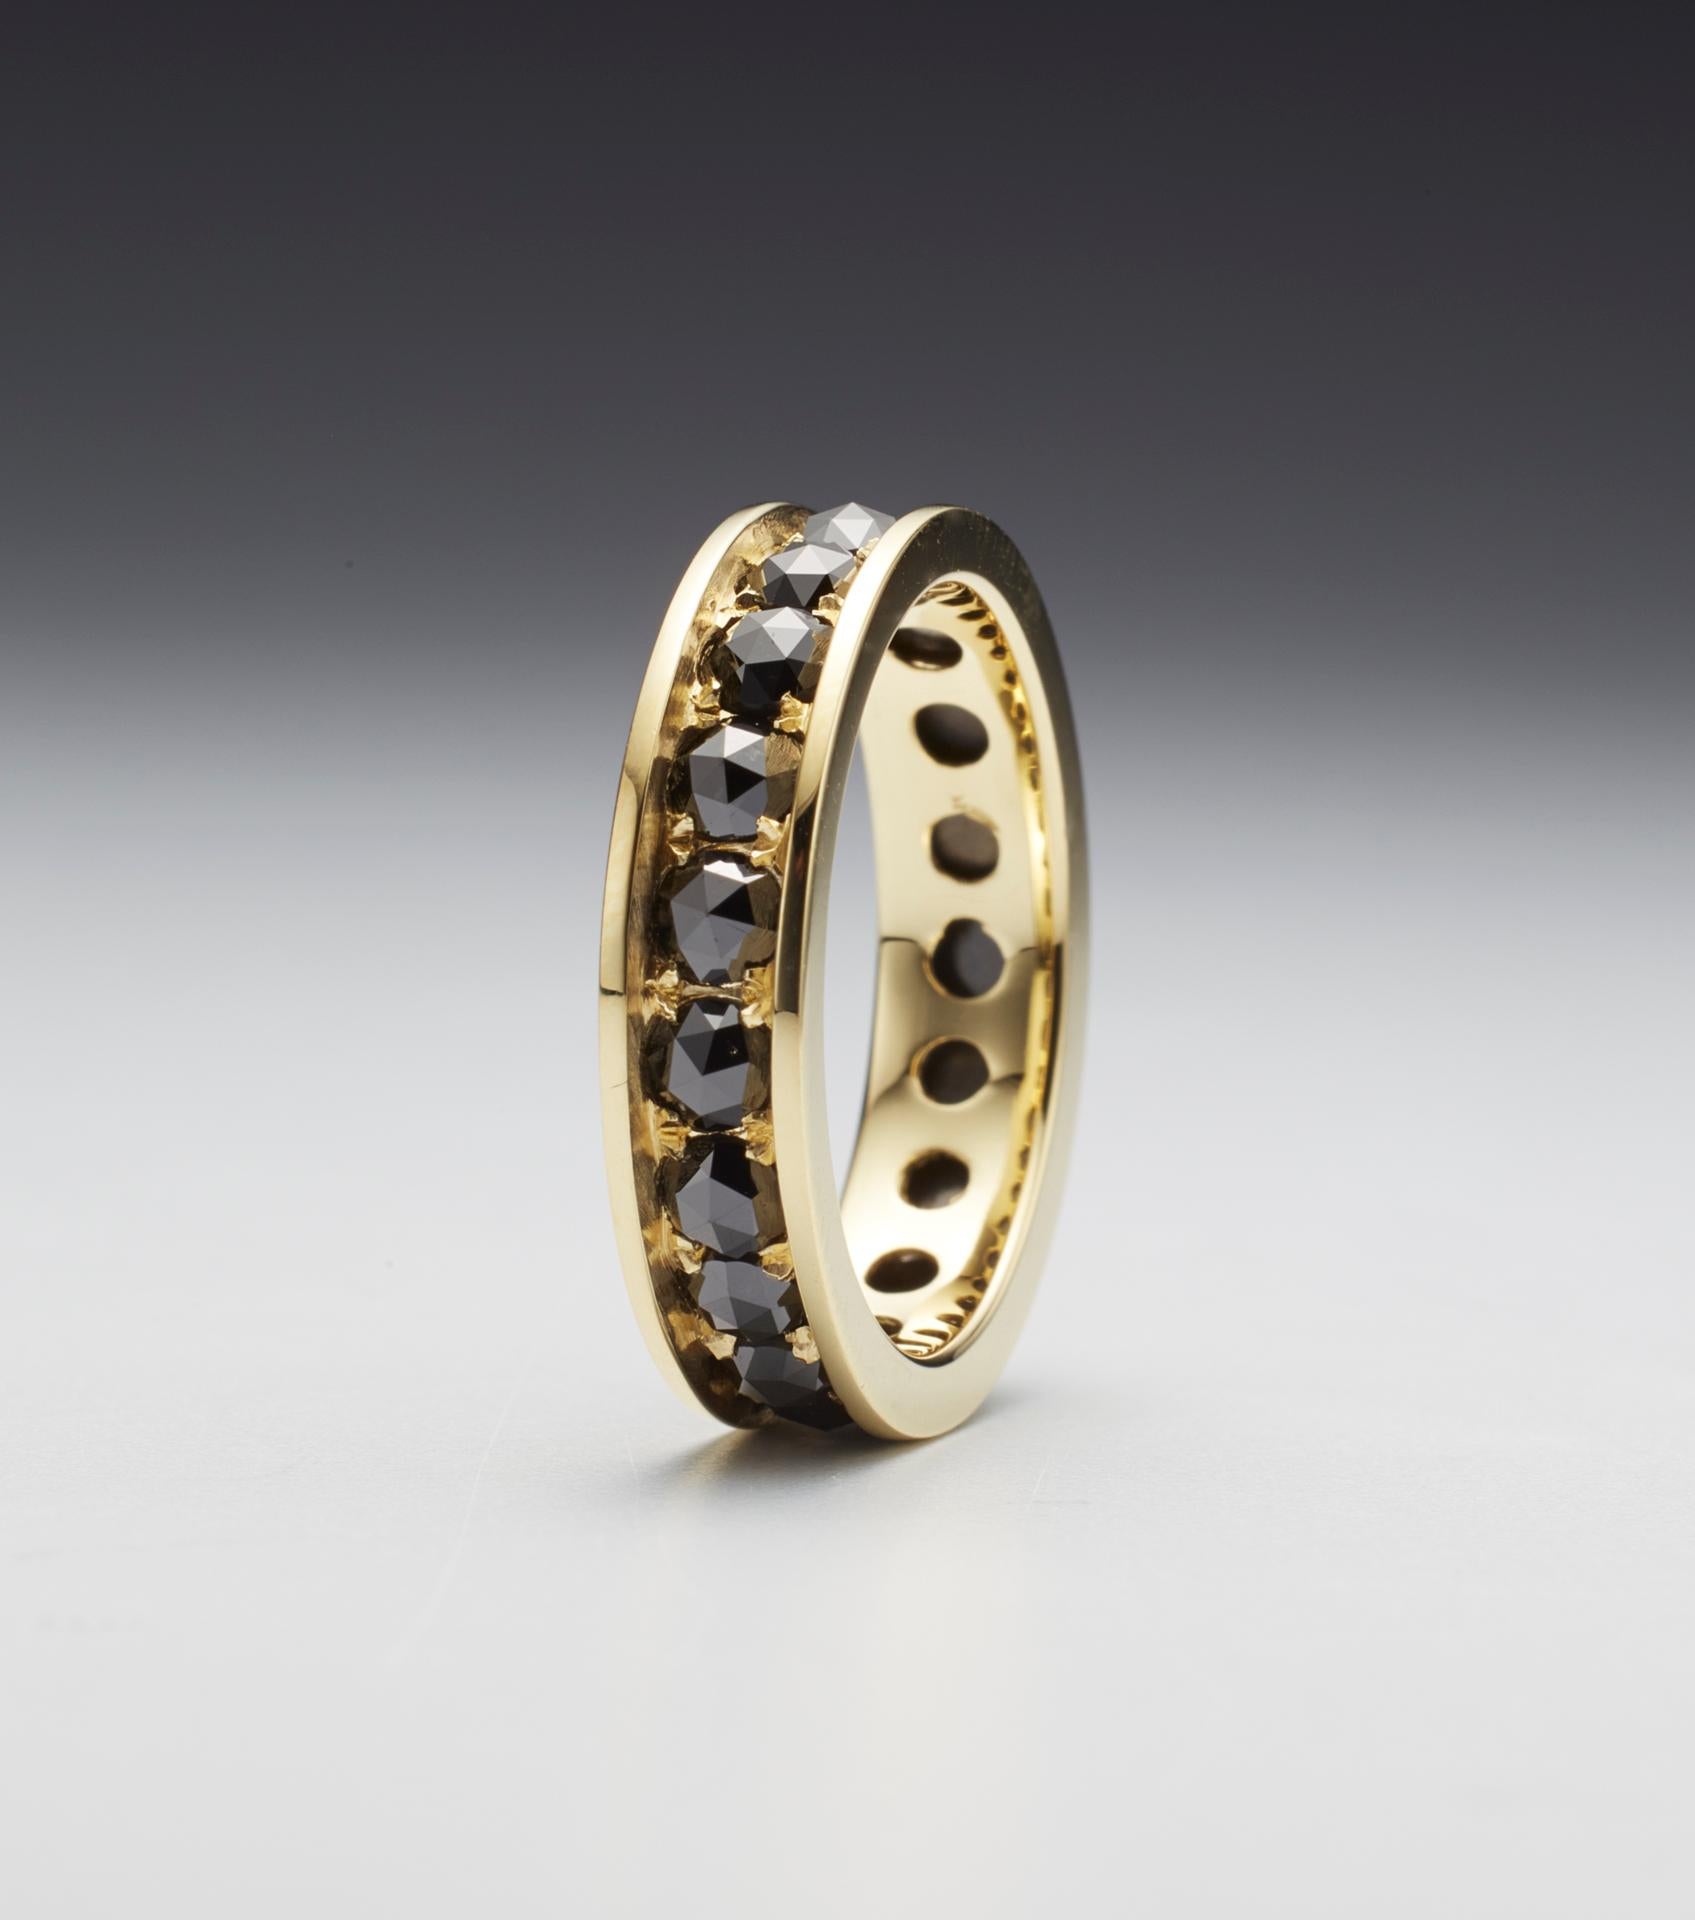 Black rose cut diamond eternity ring in 18-karat gold by artist Christopher Phelan.
Diamond weight, 2 carats, 3mm black diamonds. 
Ring size: 7
Width of ring: 4.75 mm.